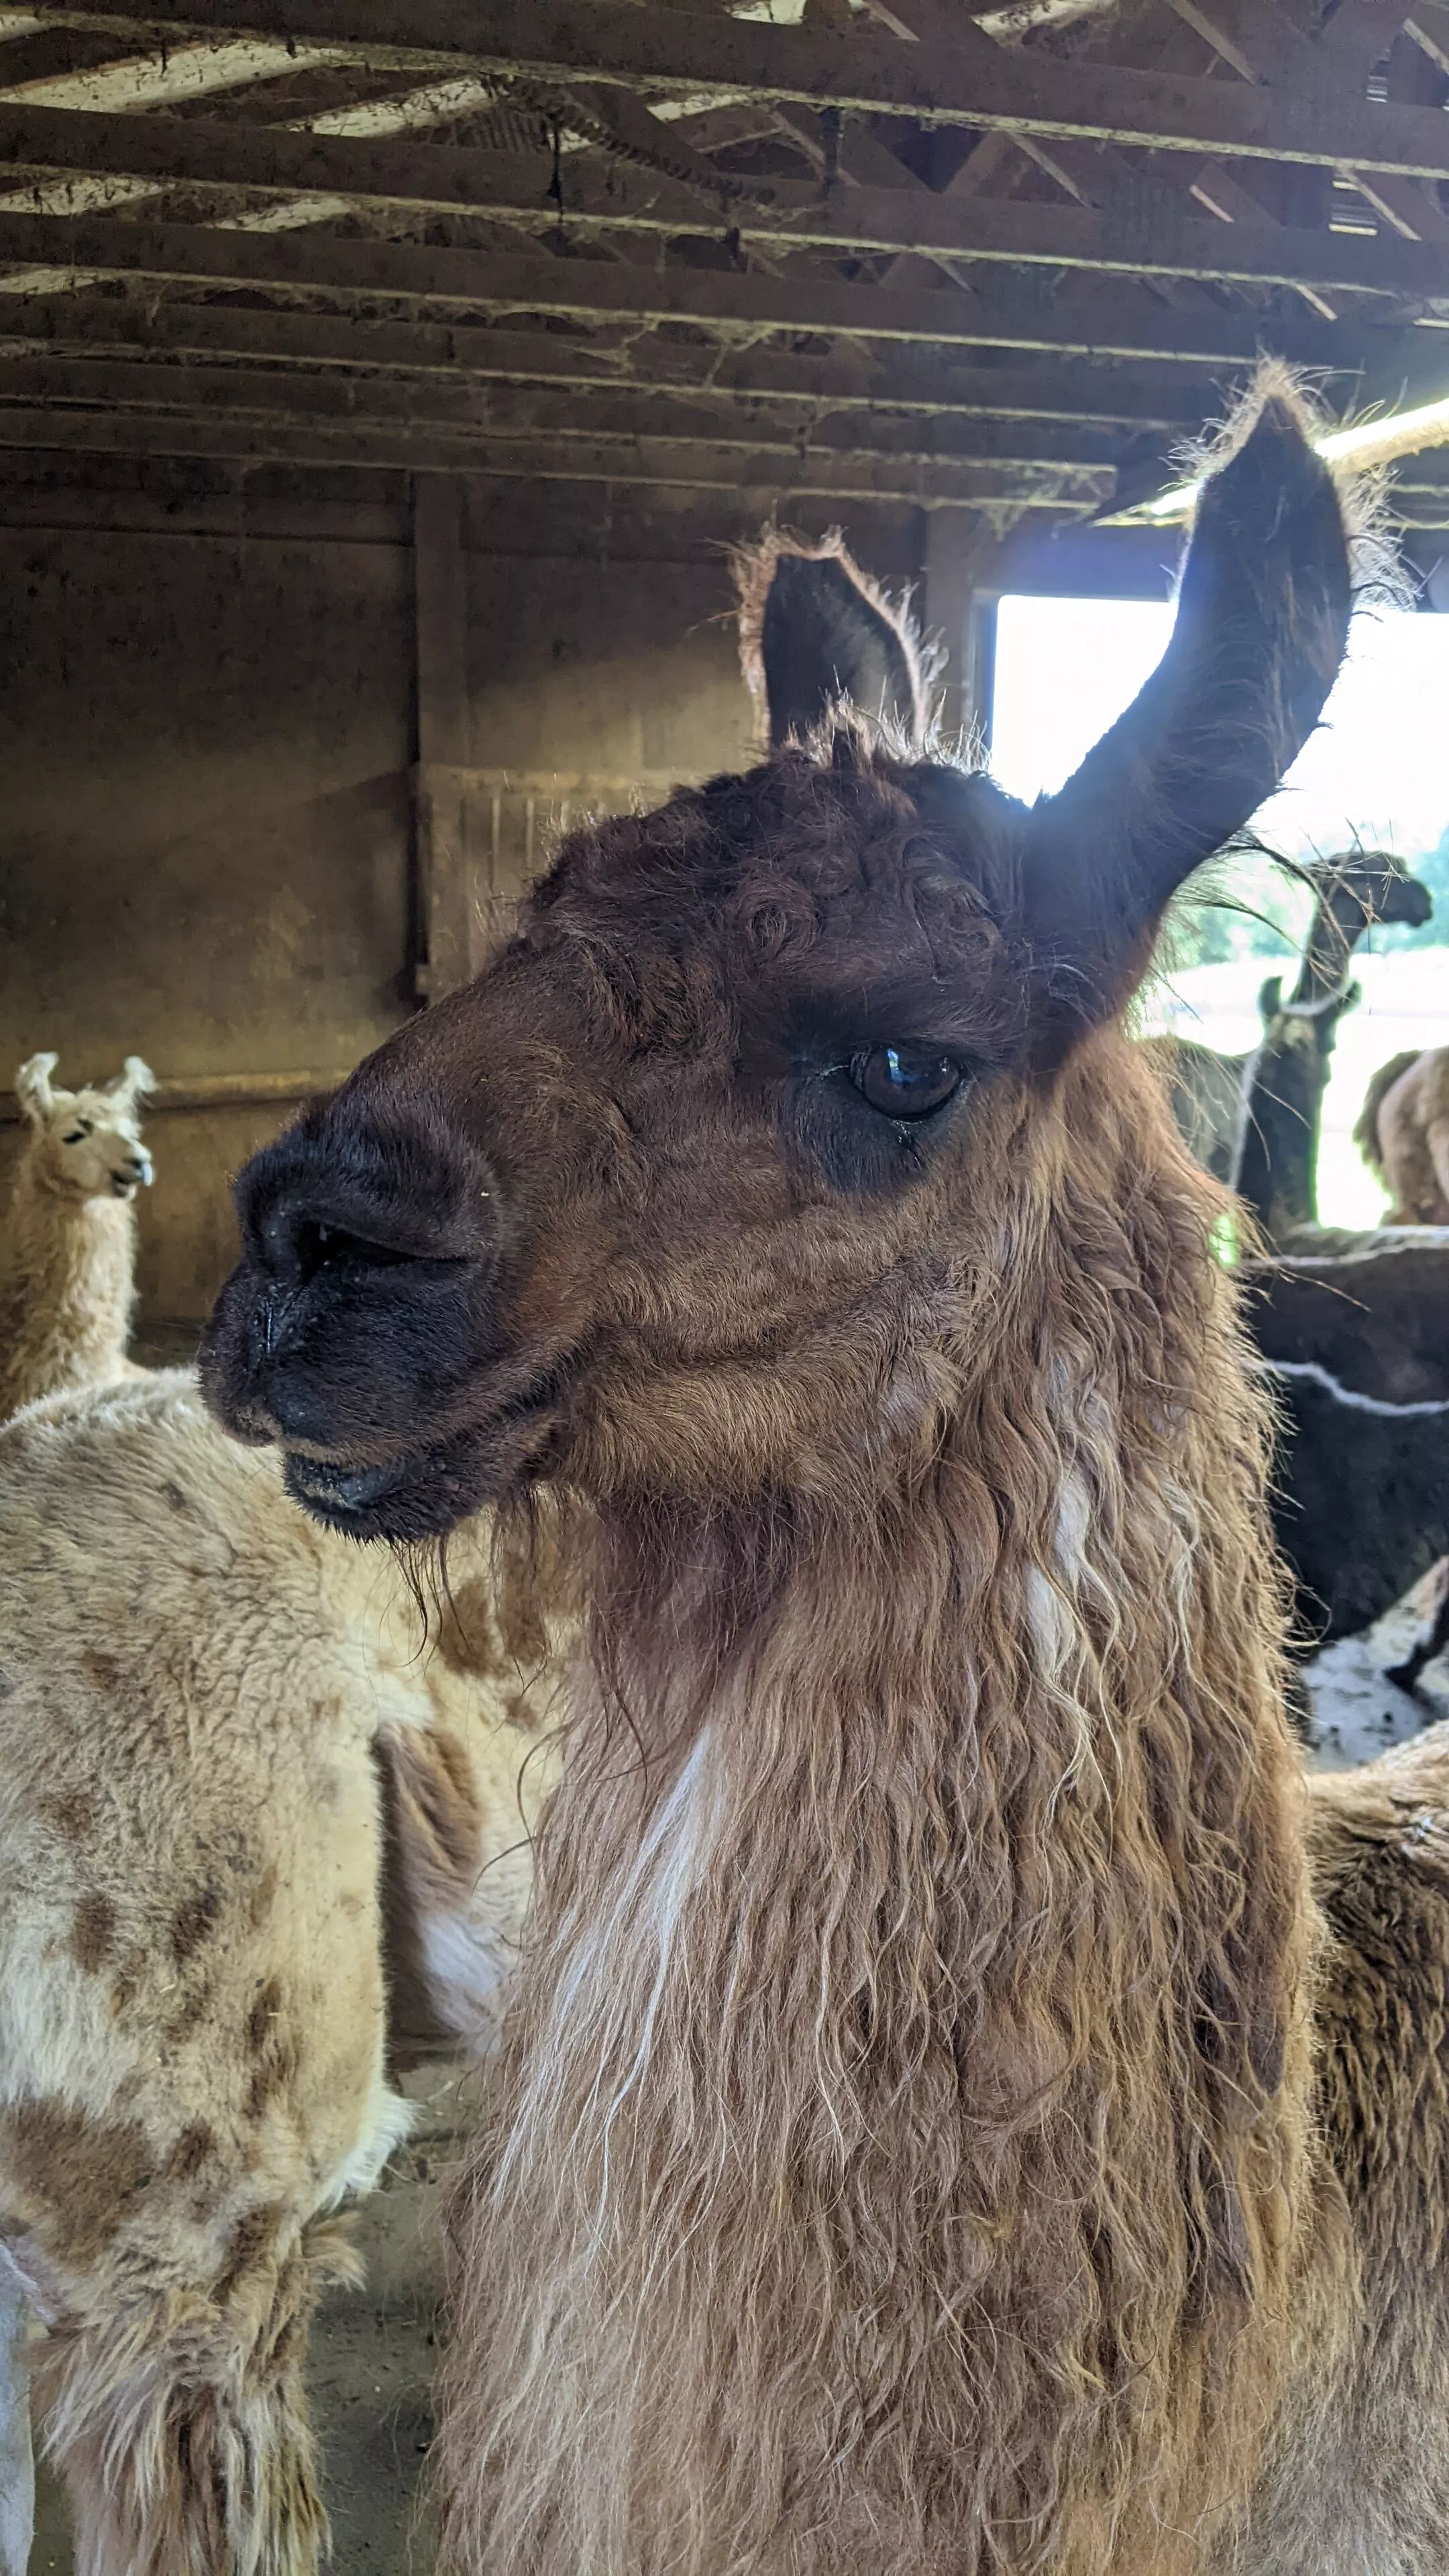 An image of a llama named Chicha